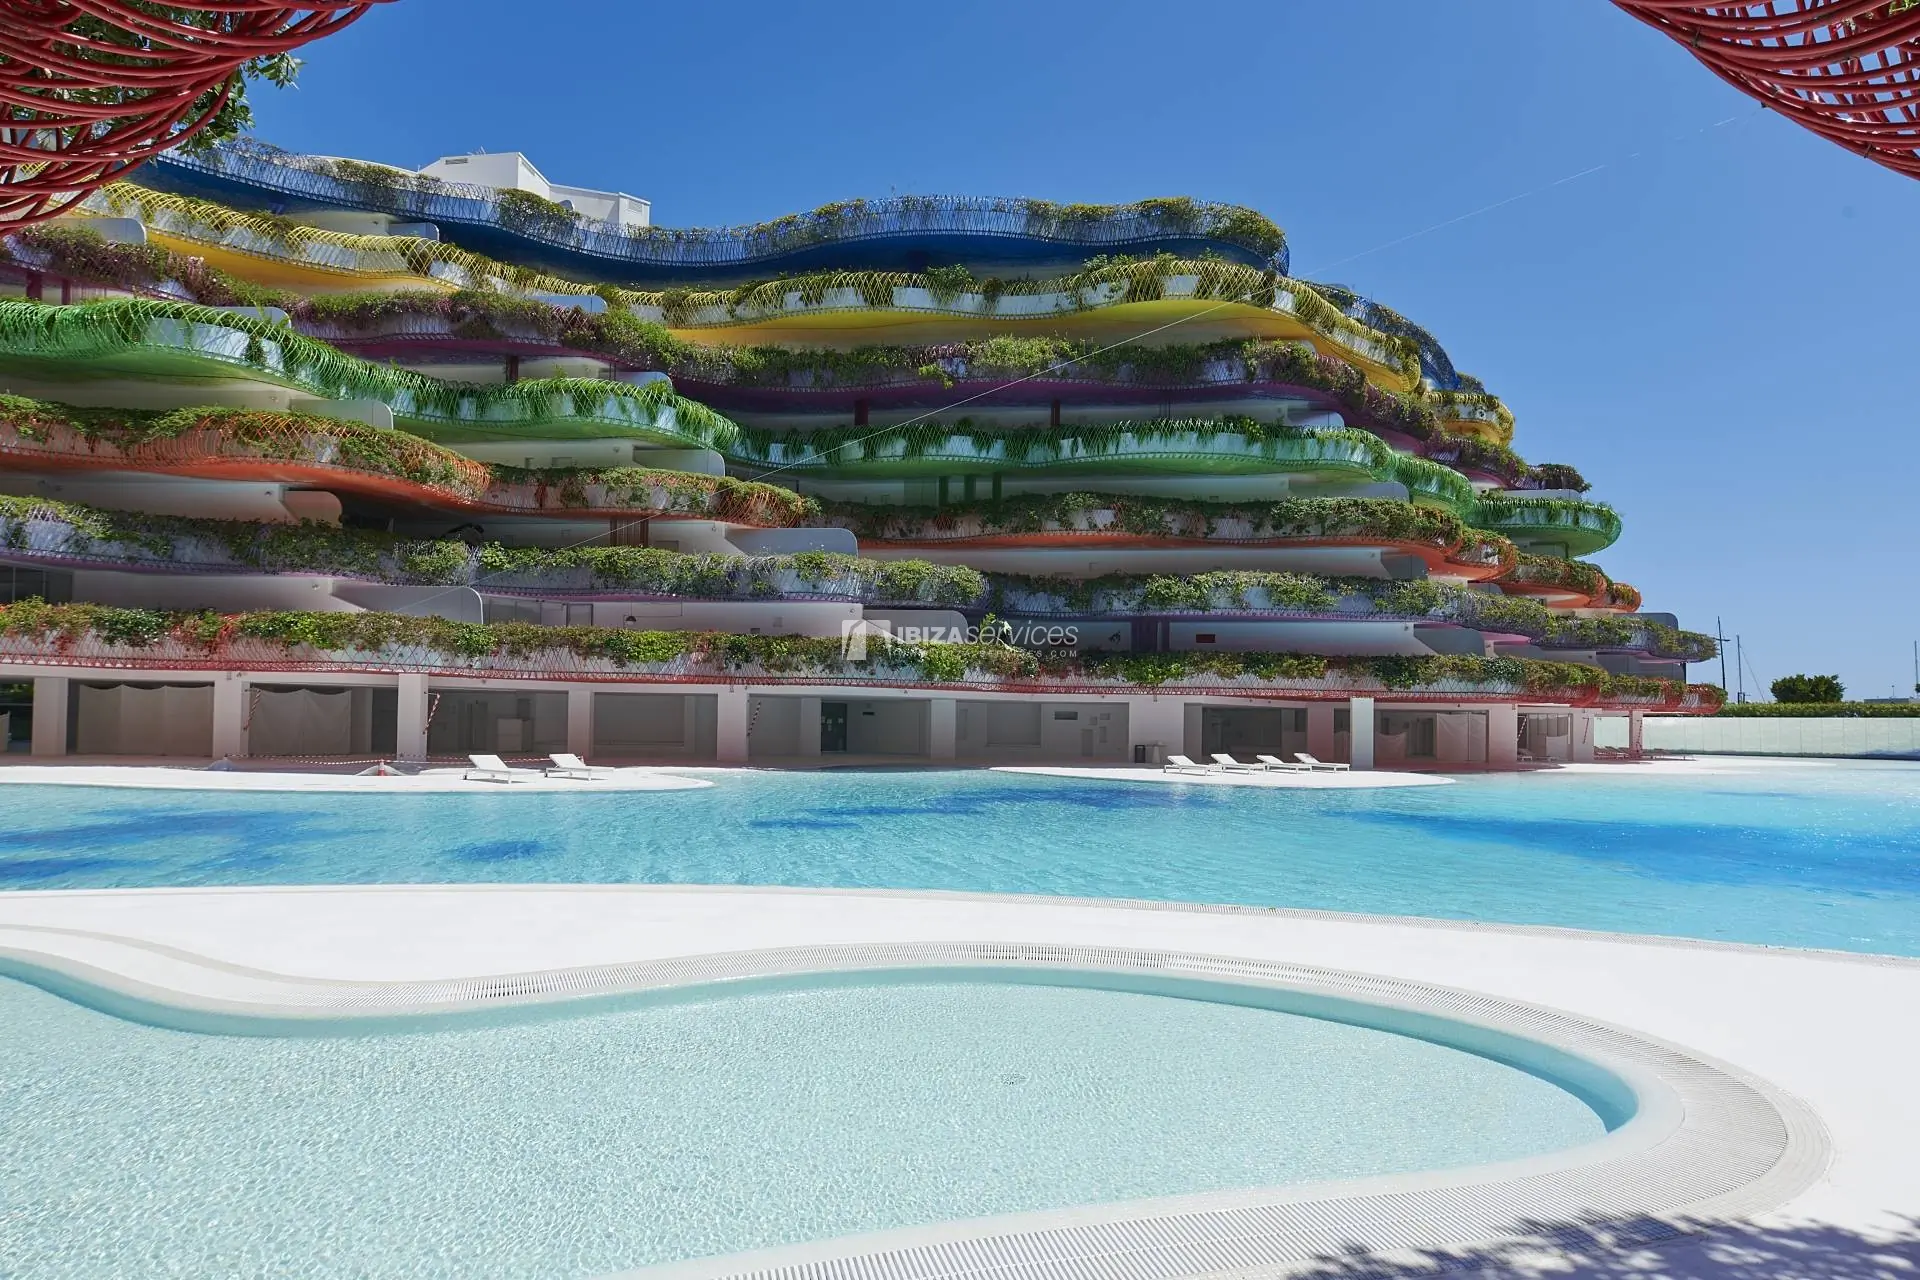 2052 Las Boas de Ibiza location d’un appartement de luxe de 1 chambre.